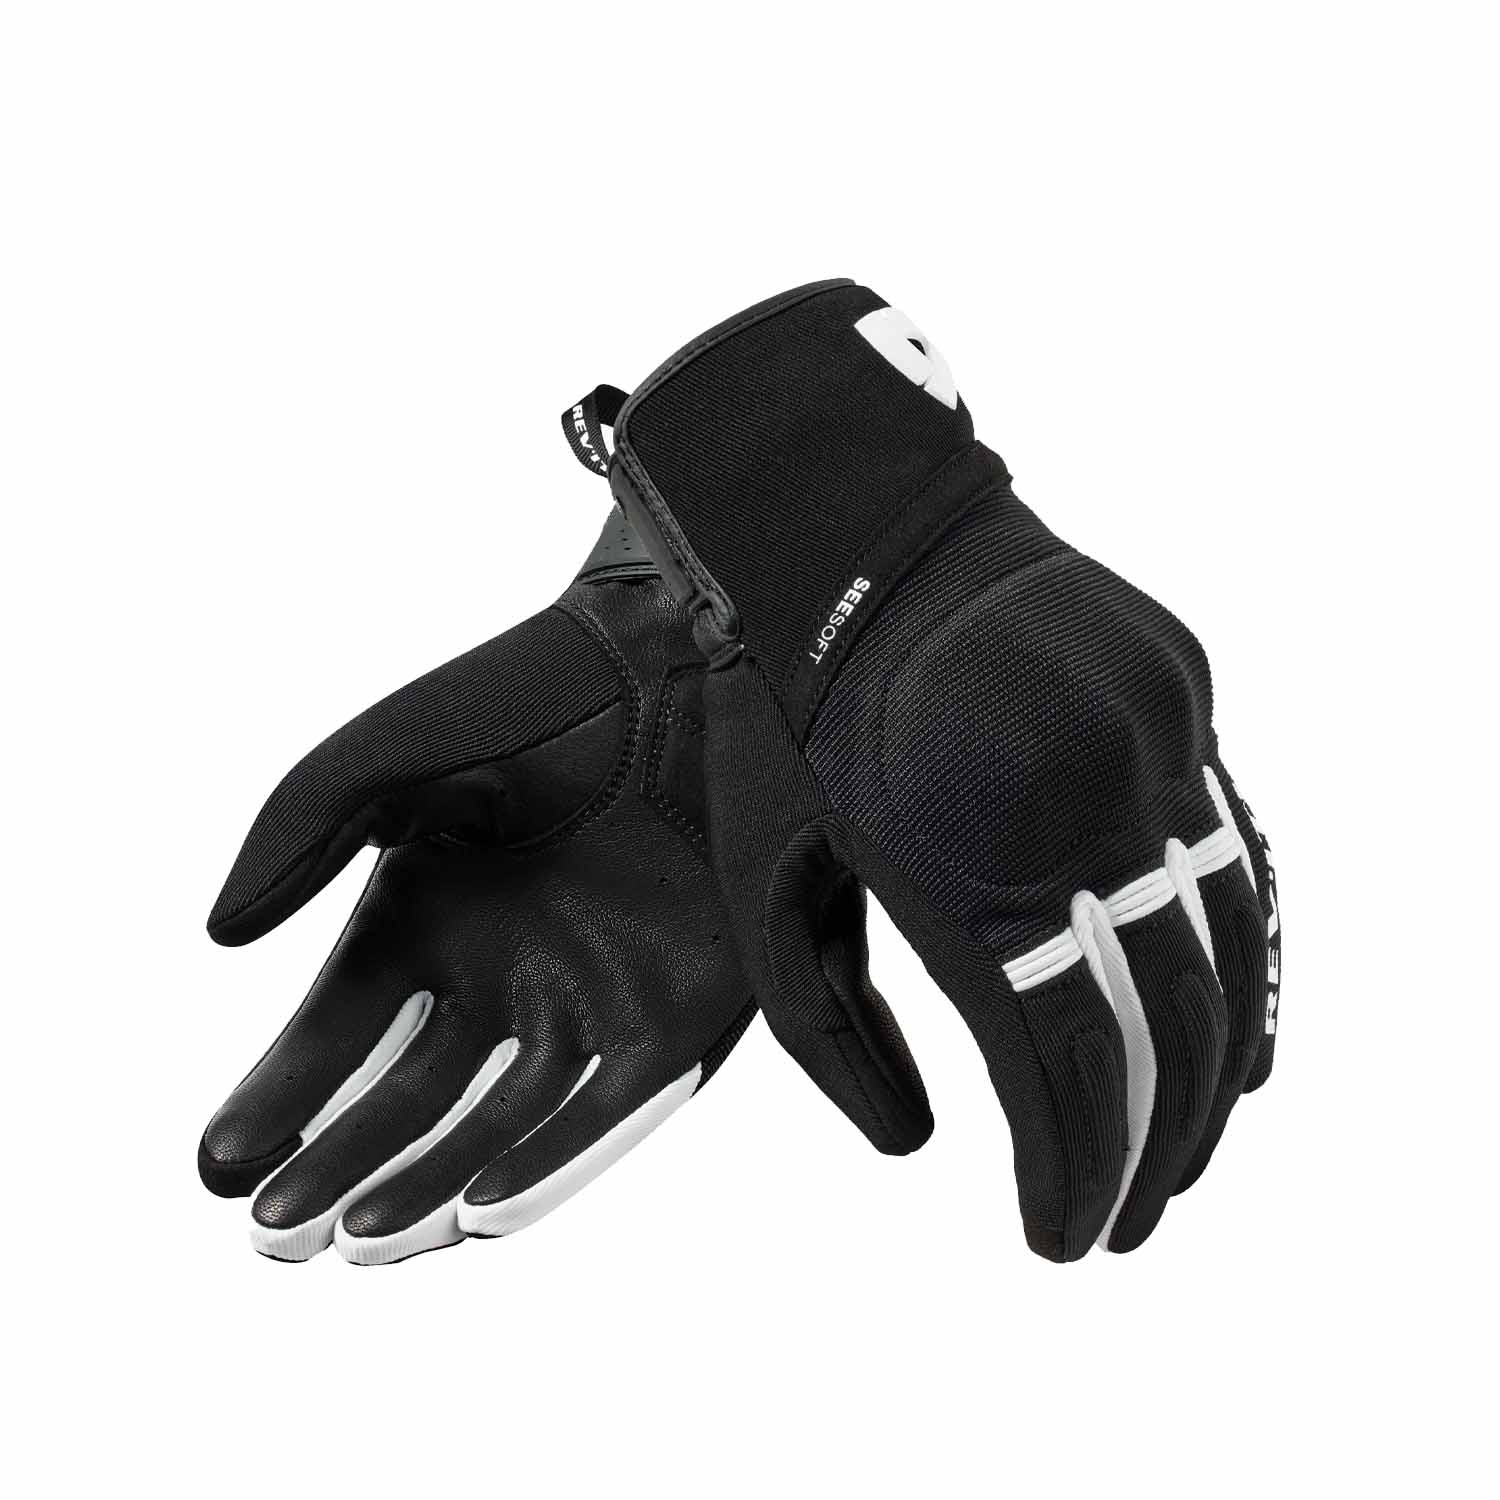 Image of REV'IT! Mosca 2 Gloves Black White Größe L